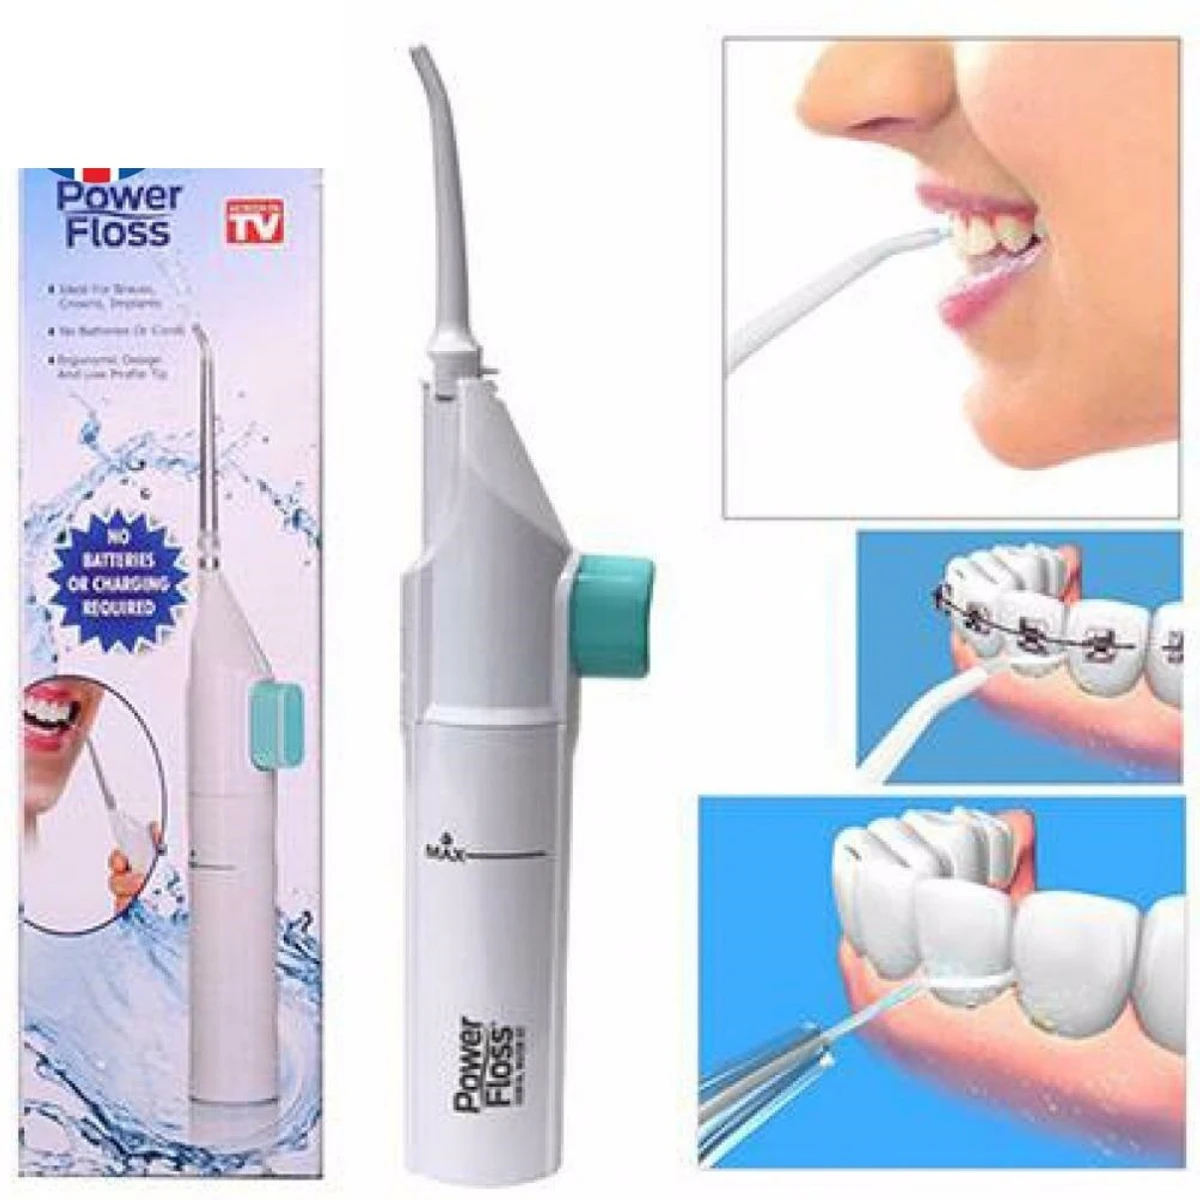 Oral Irrigator Dental Water Power Floss Pick Teeth Cleaning-white